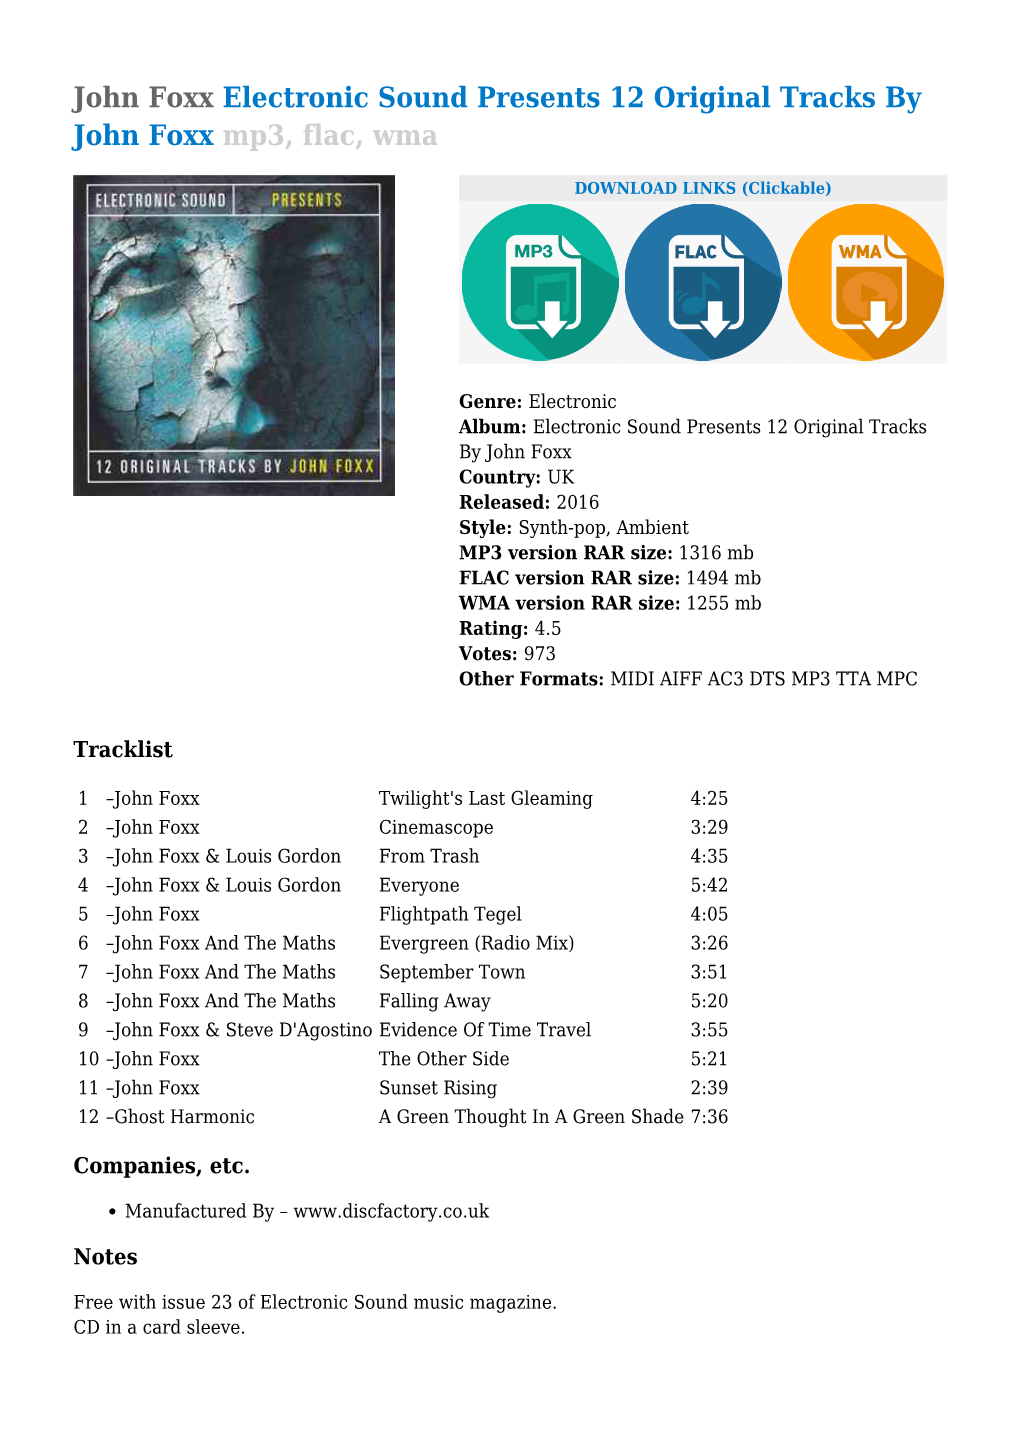 Electronic Sound Presents 12 Original Tracks by John Foxx Mp3, Flac, Wma